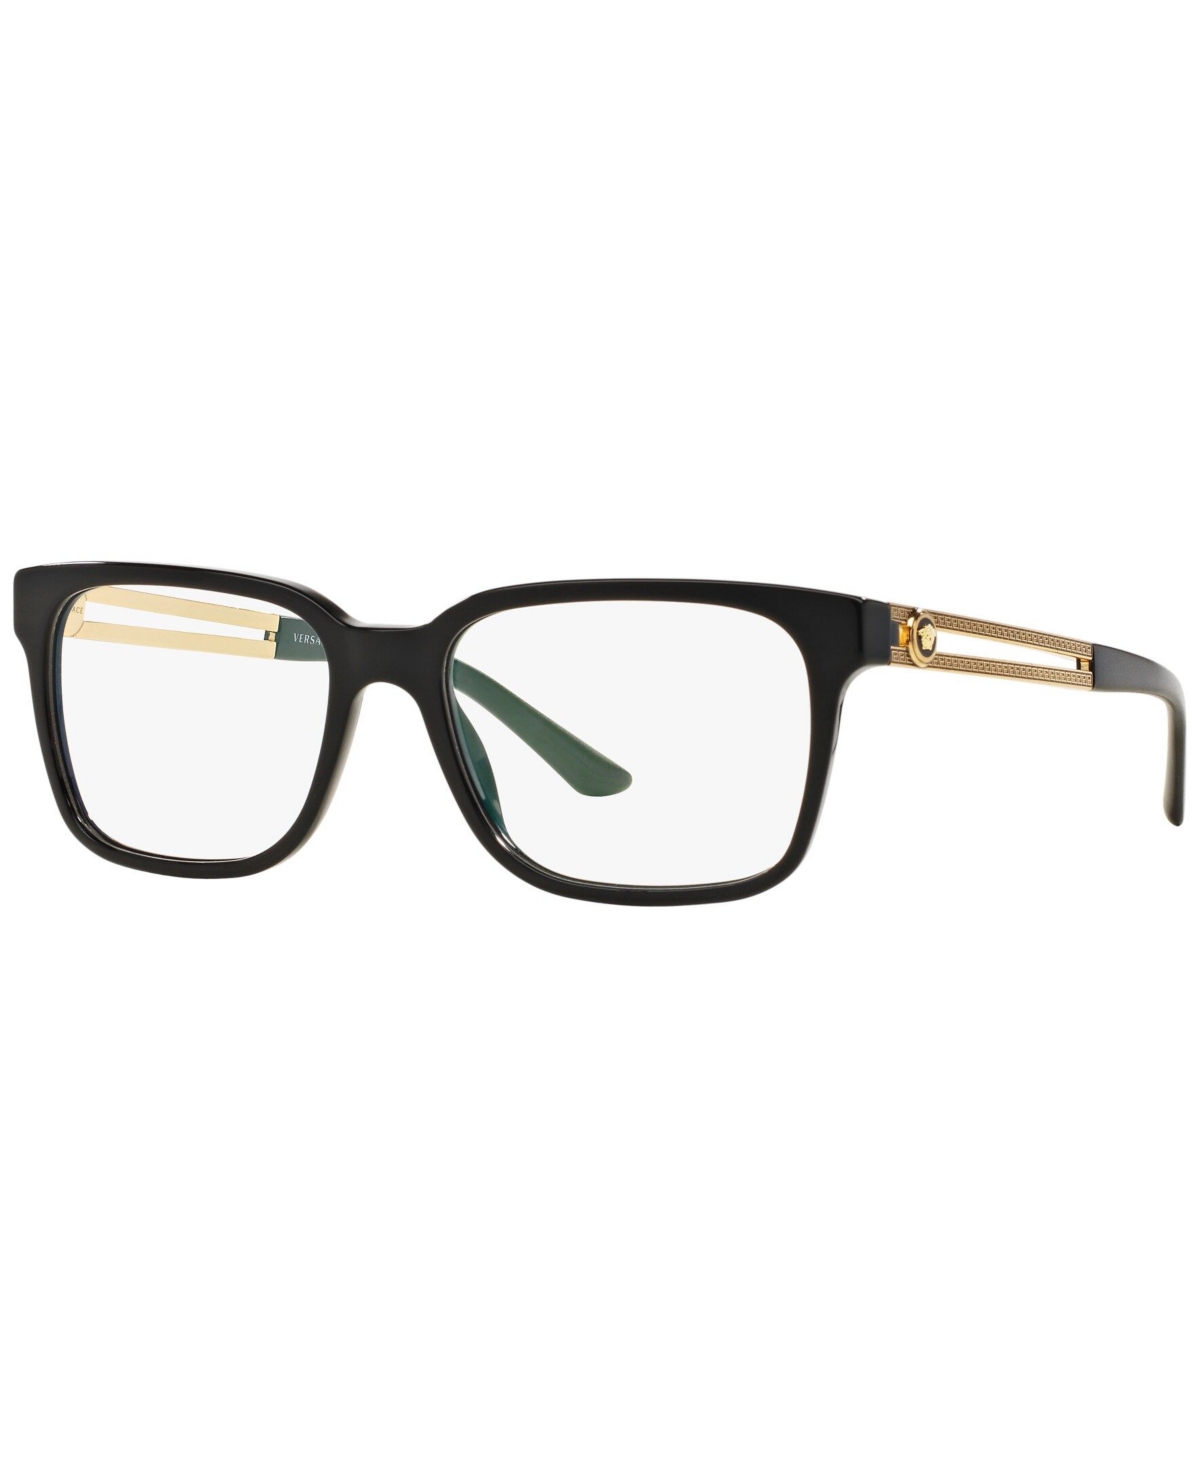 VE3218 Men's Square Eyeglasses - Black